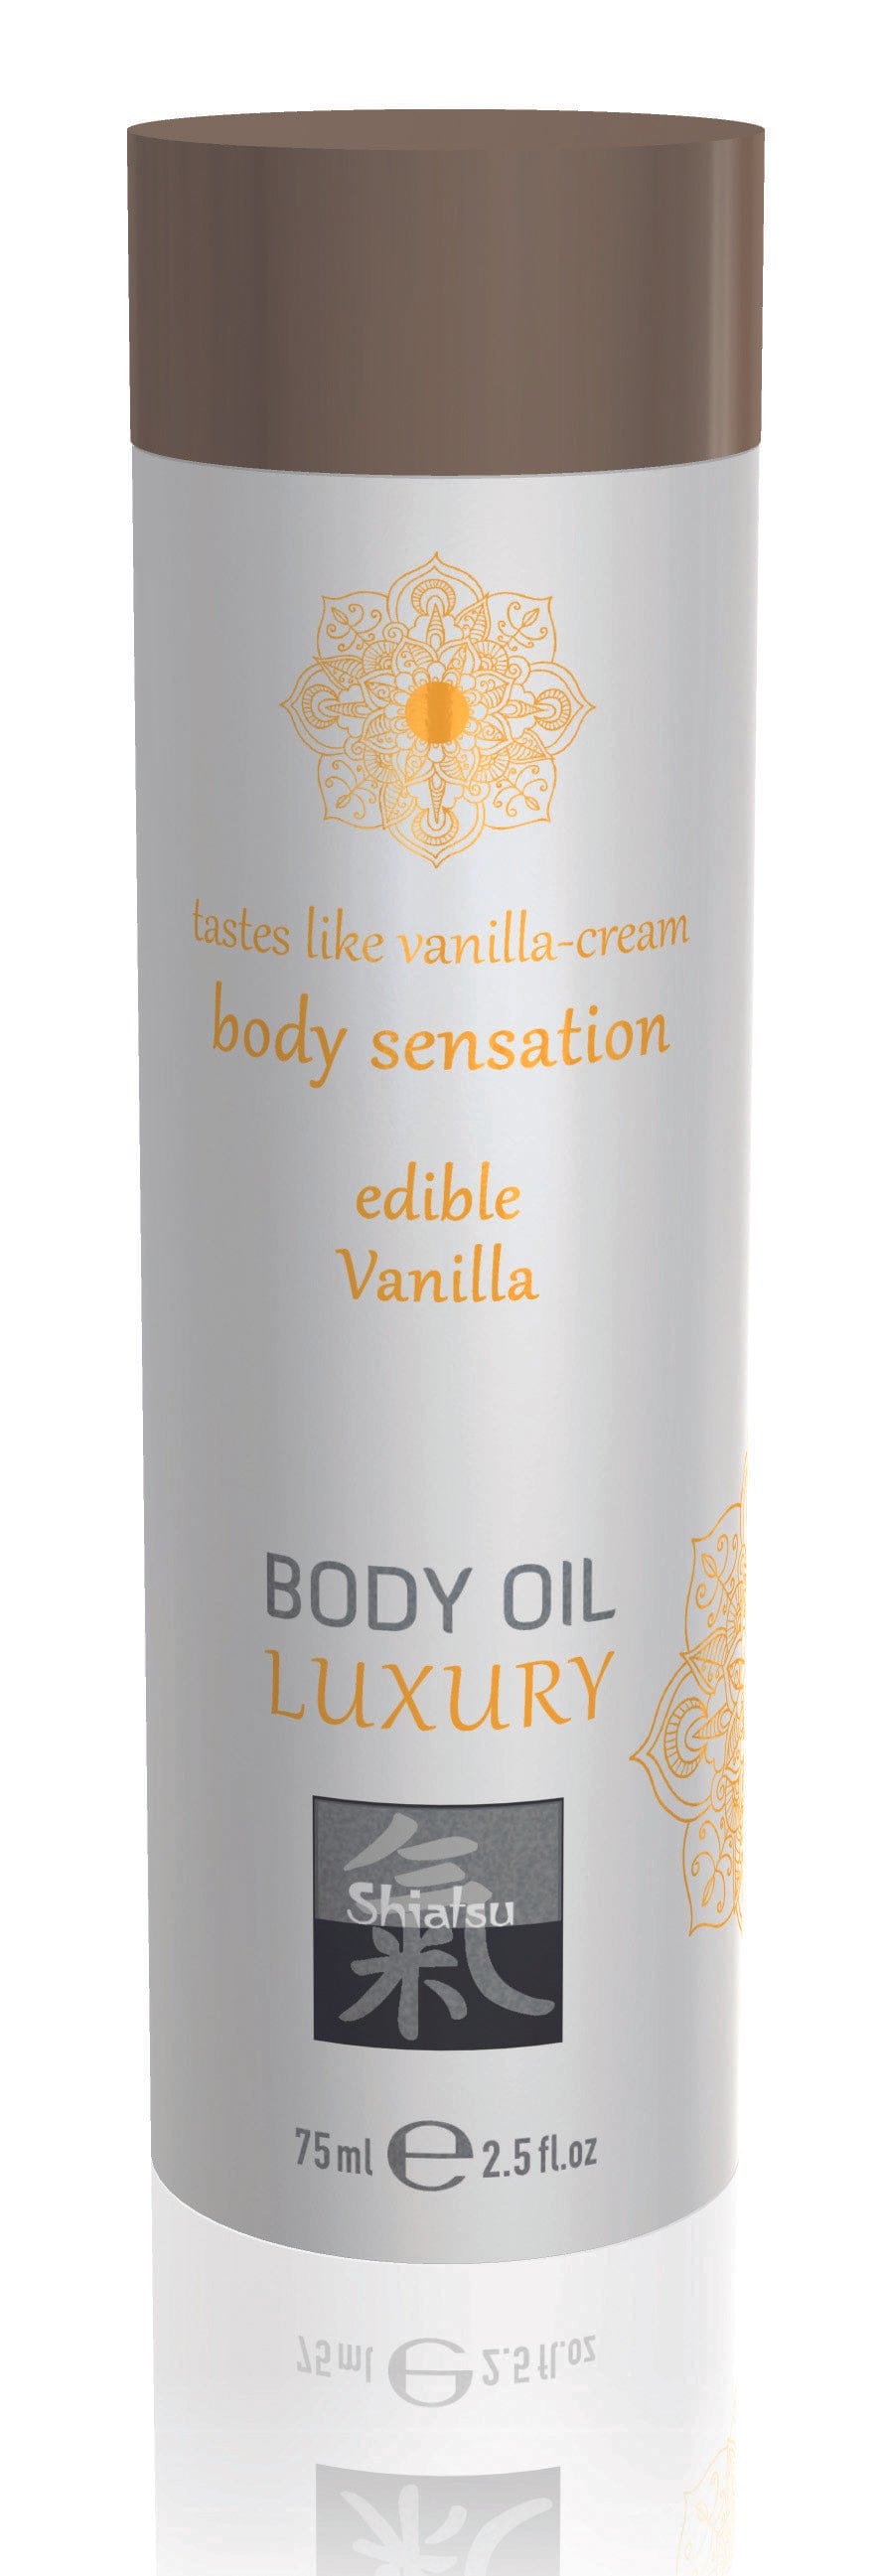 Shiatsu Lotions & Potions Shiatsu Luxury Body Oil Edible Vanilla 4042342004793